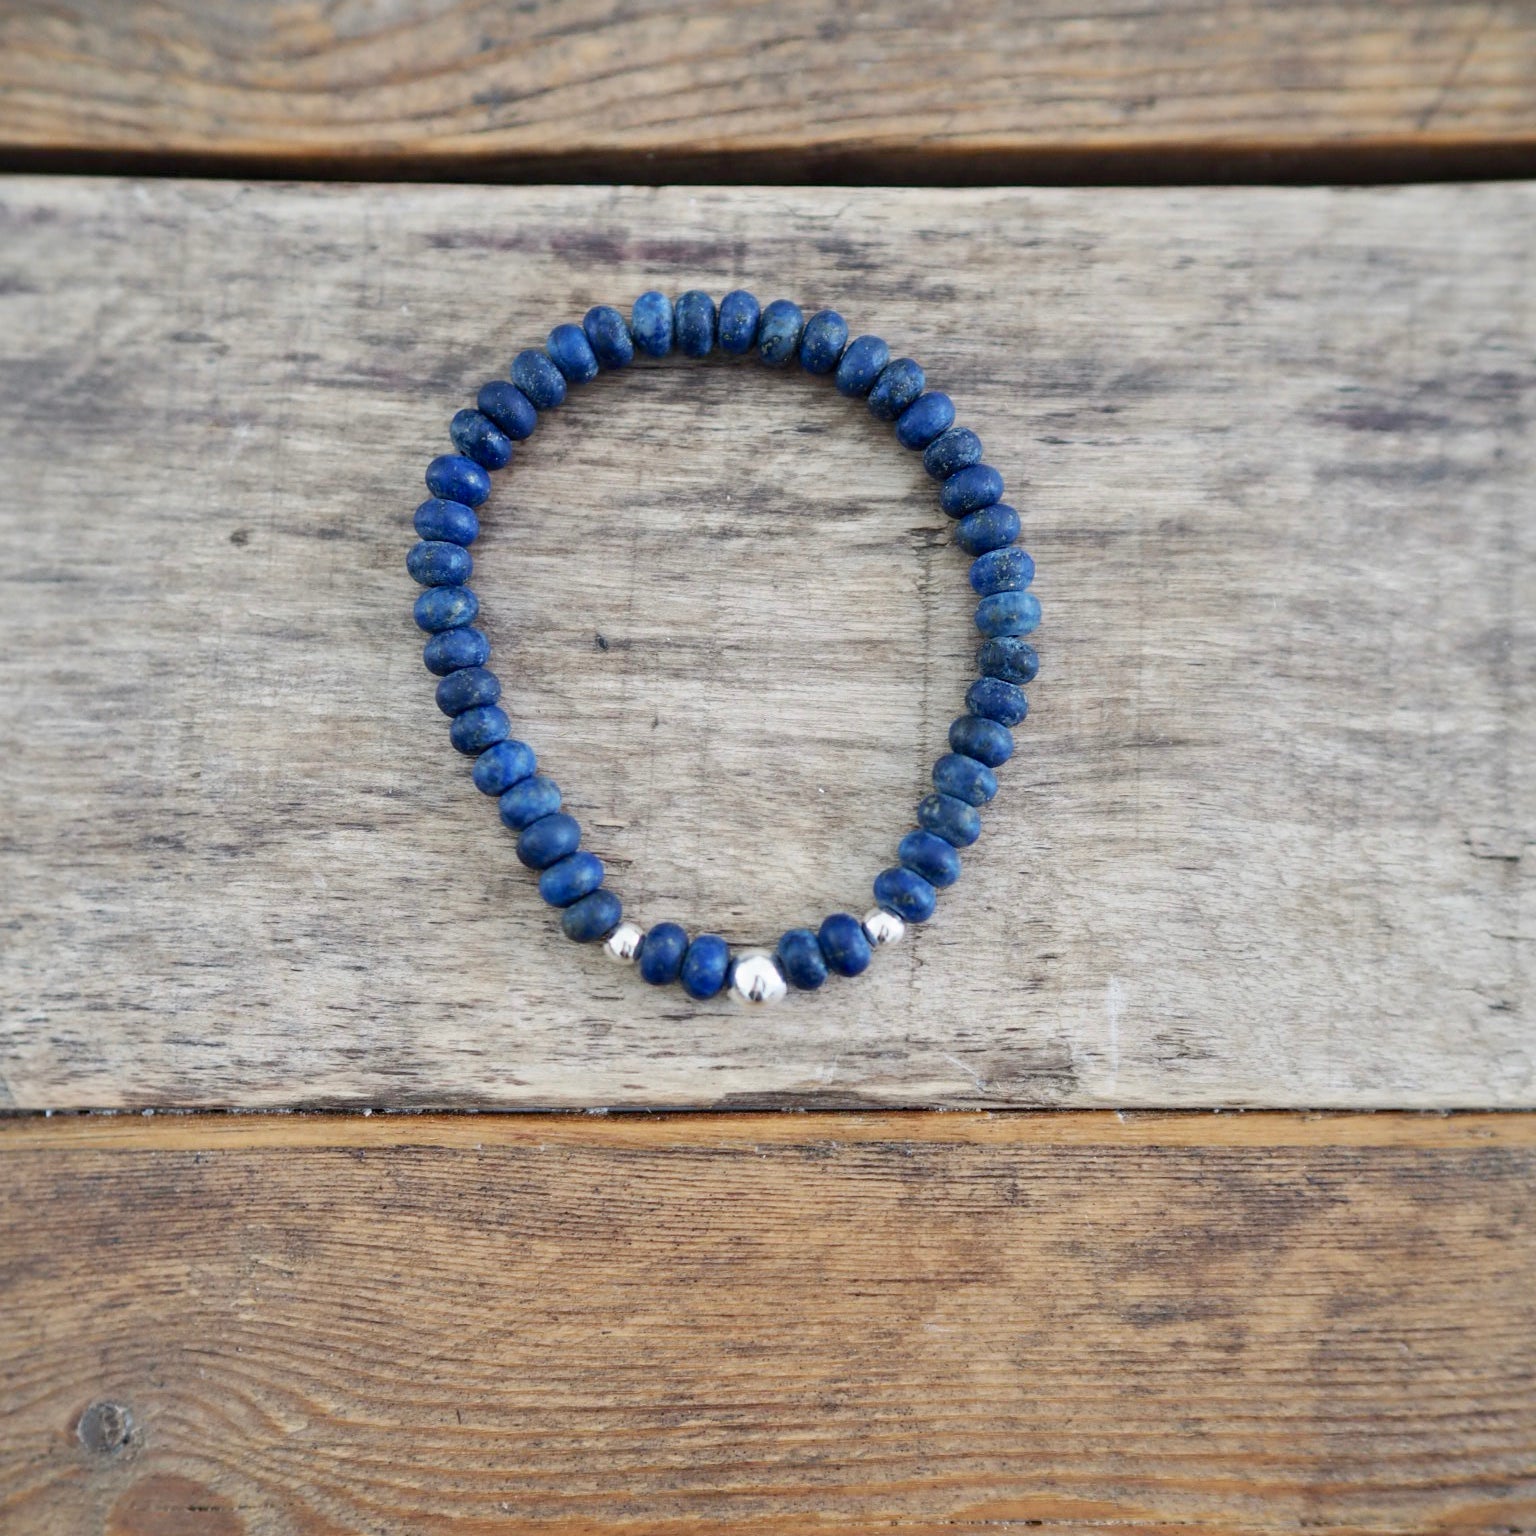 Lapis Lazuli Bracelet by Nancy Wallis Designs in Canada